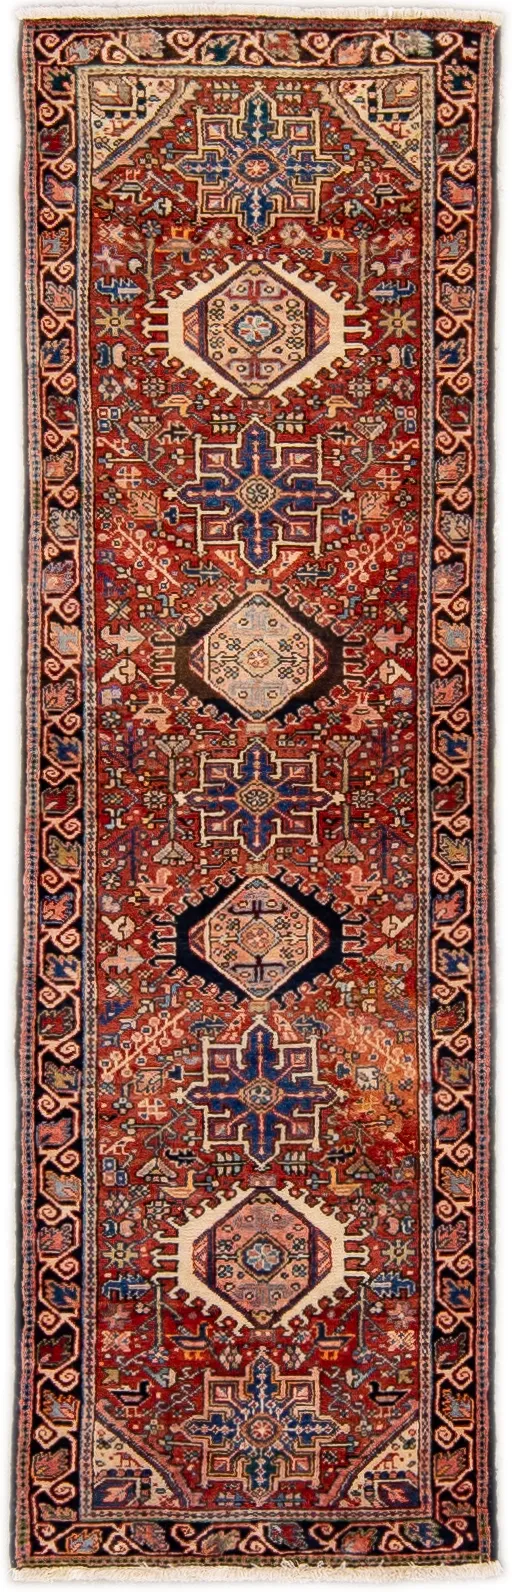 Heriz Rust Persian Wool Rug - Apadana - Red - Red